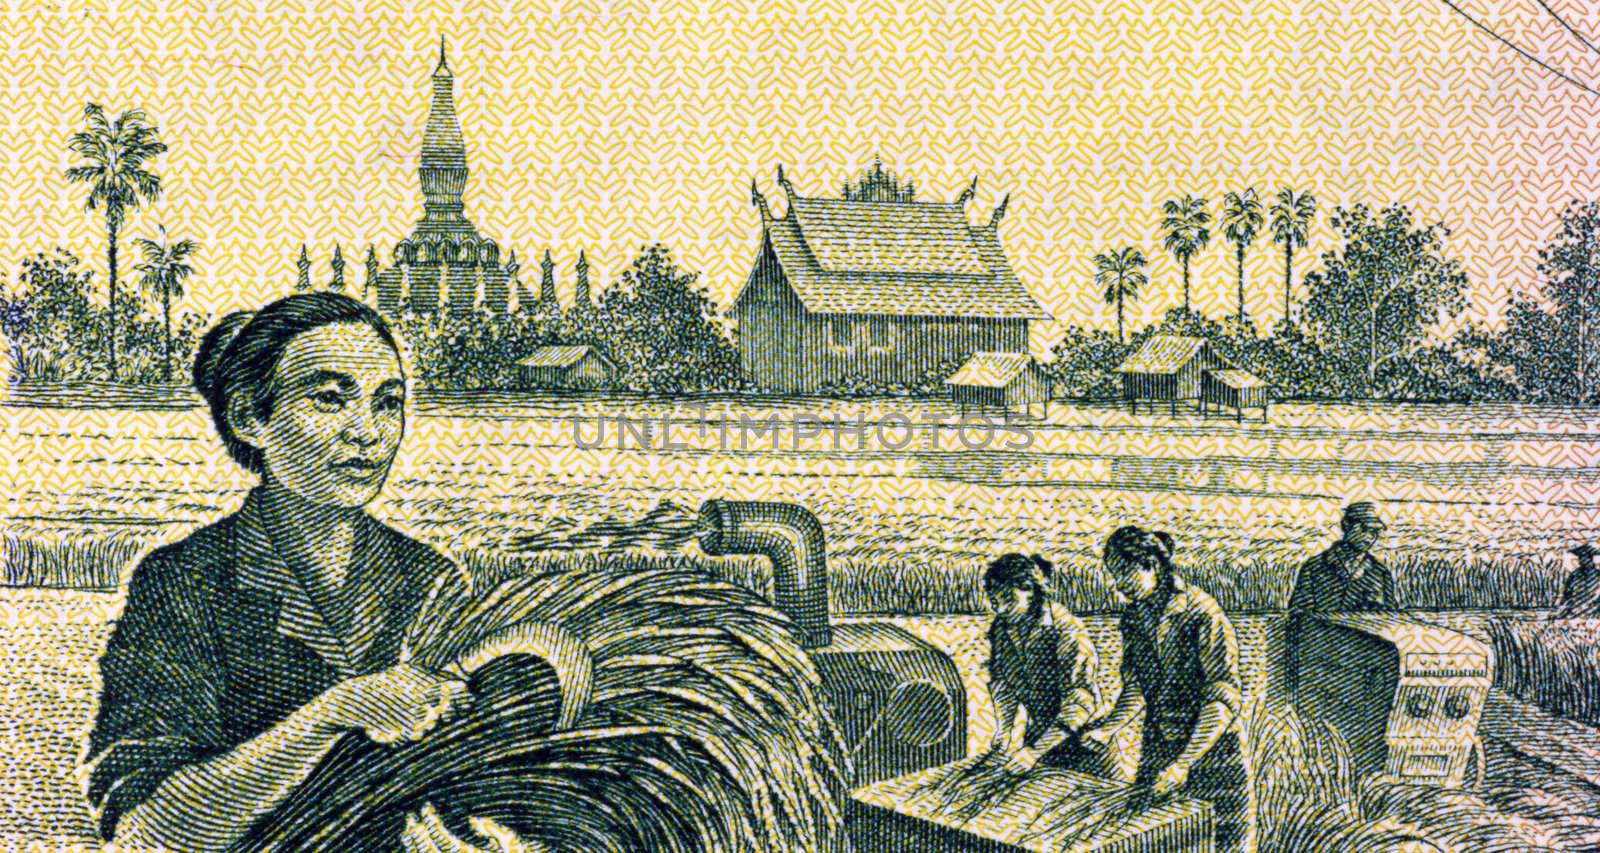 Grain Harvesting on 100 Kip 1979 Banknote from Laos.